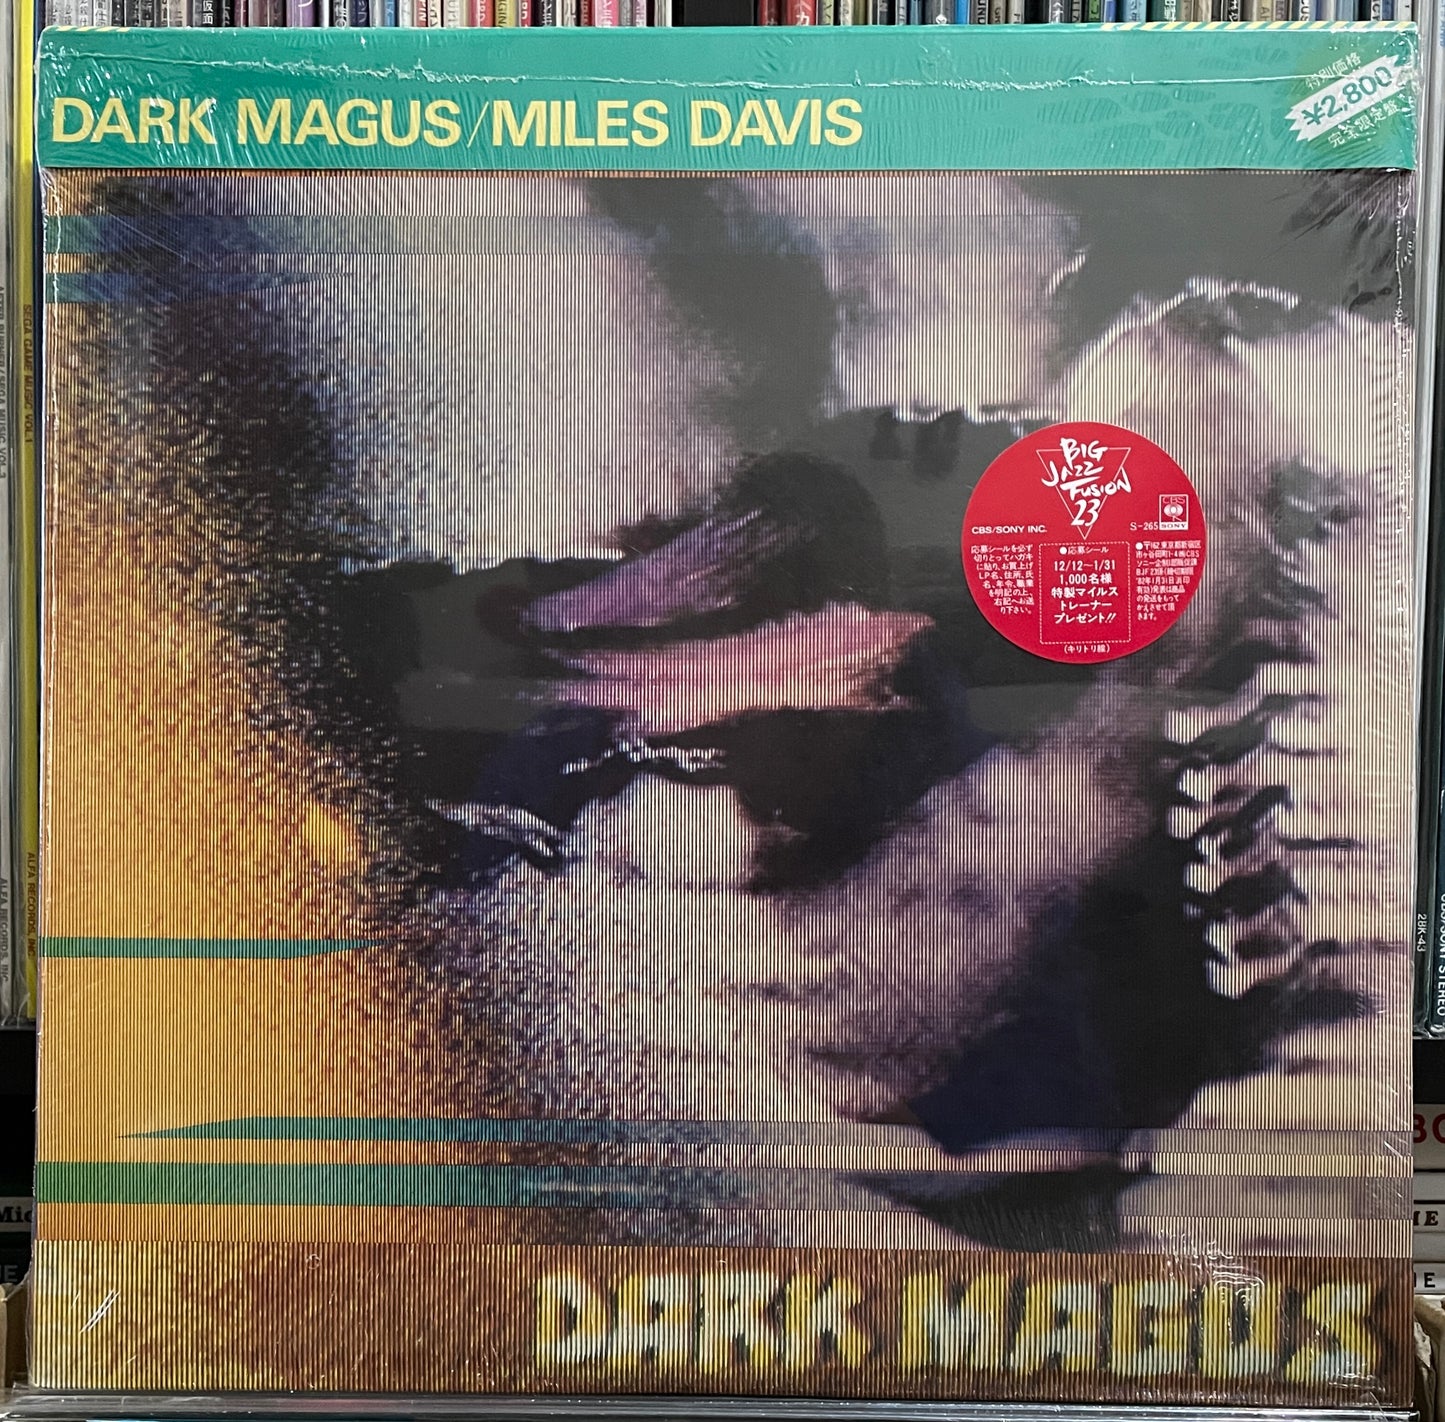 Miles Davis “Dark Magus” (1977)